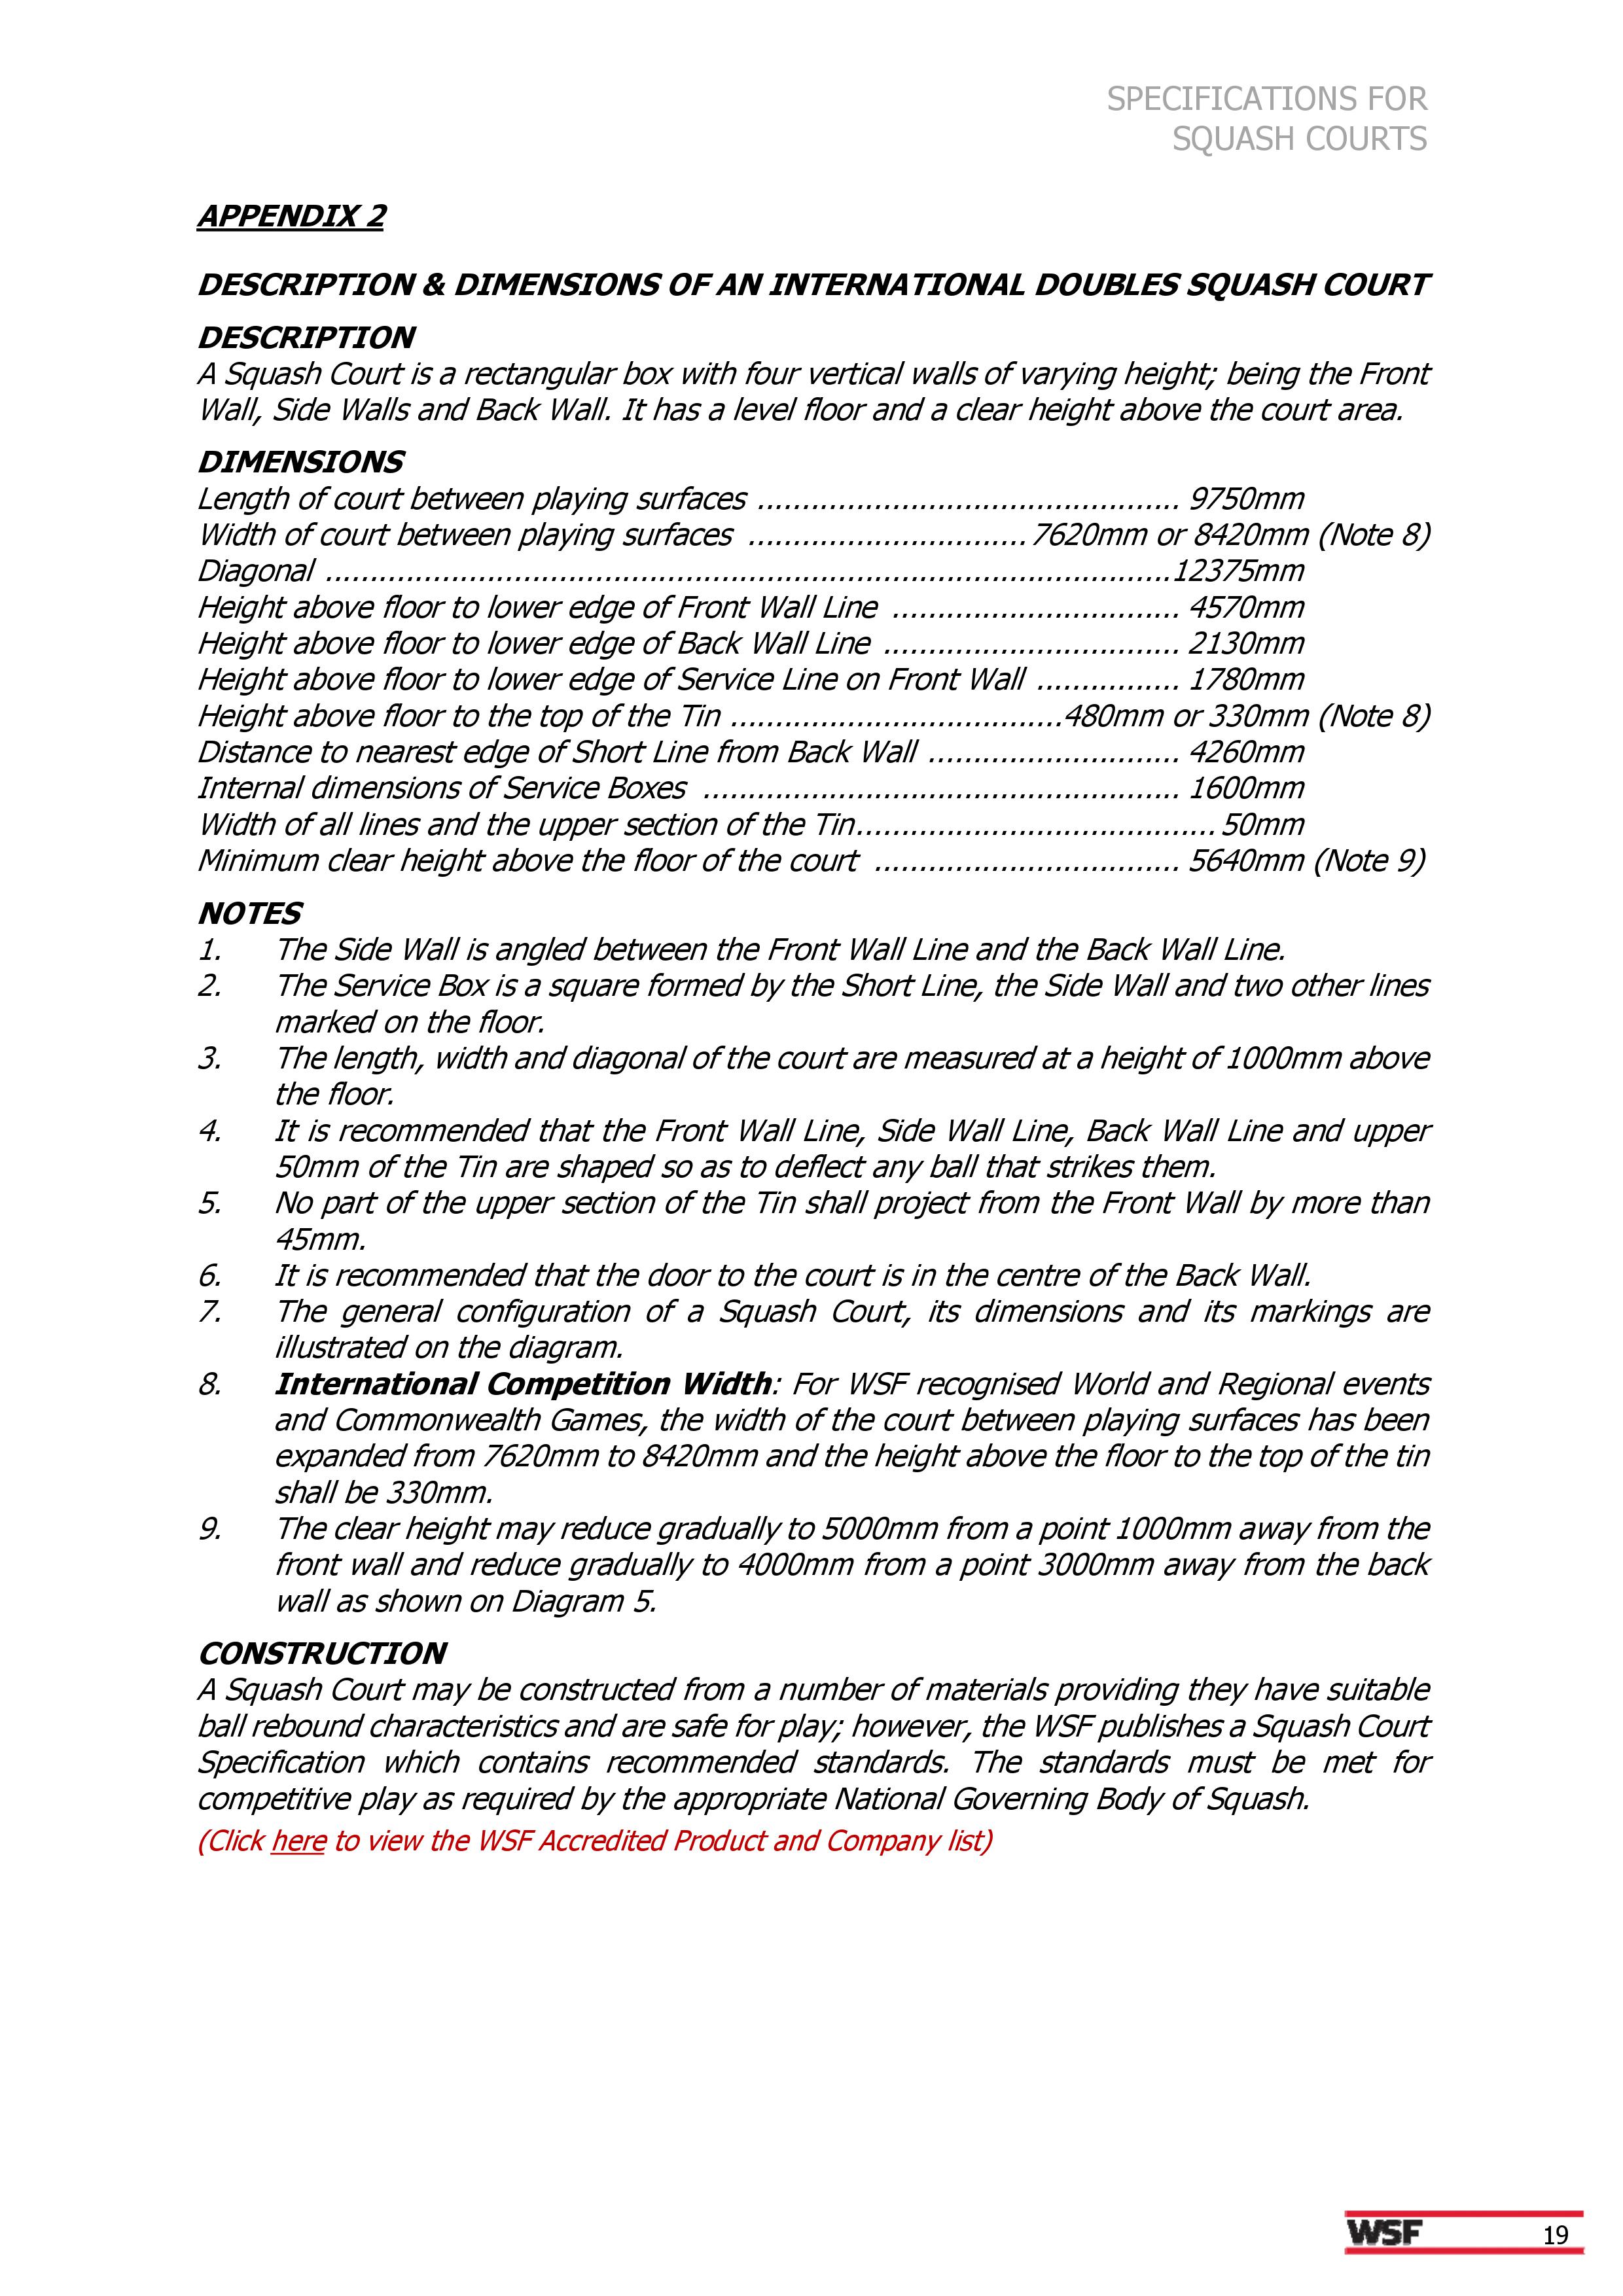 World Squash Federation Squash Court Specifications - Global Squash Coach - Page 21.jpg